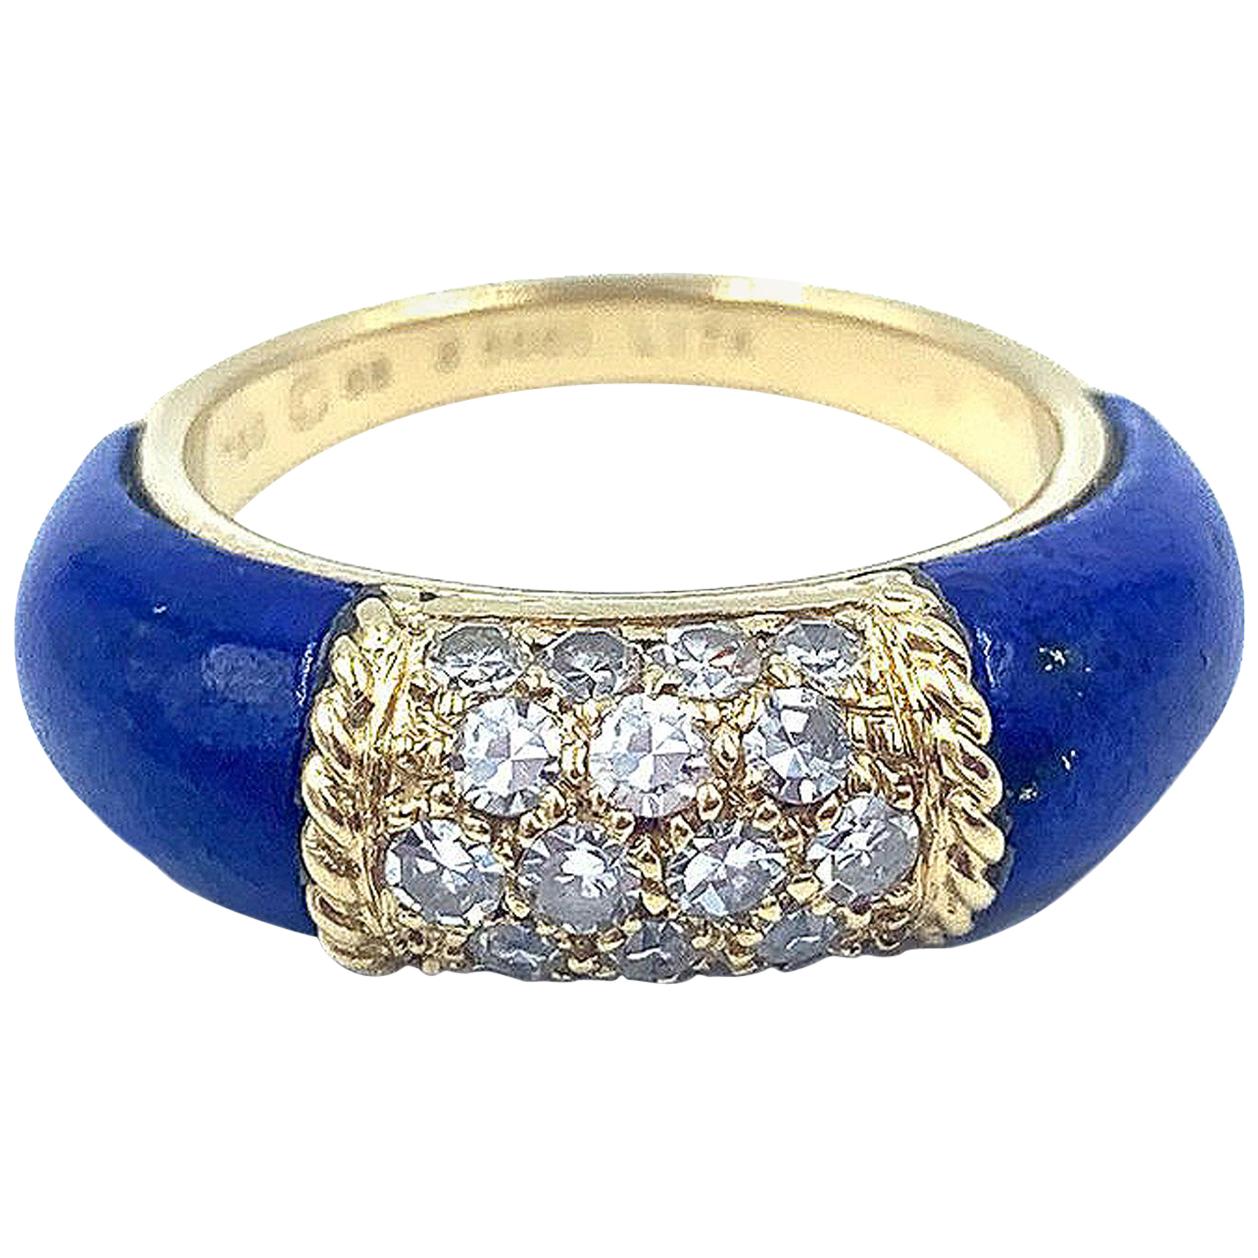 Van Cleef & Arpels Blue Lapis and Diamond Ring in 18 Karat Yellow Gold